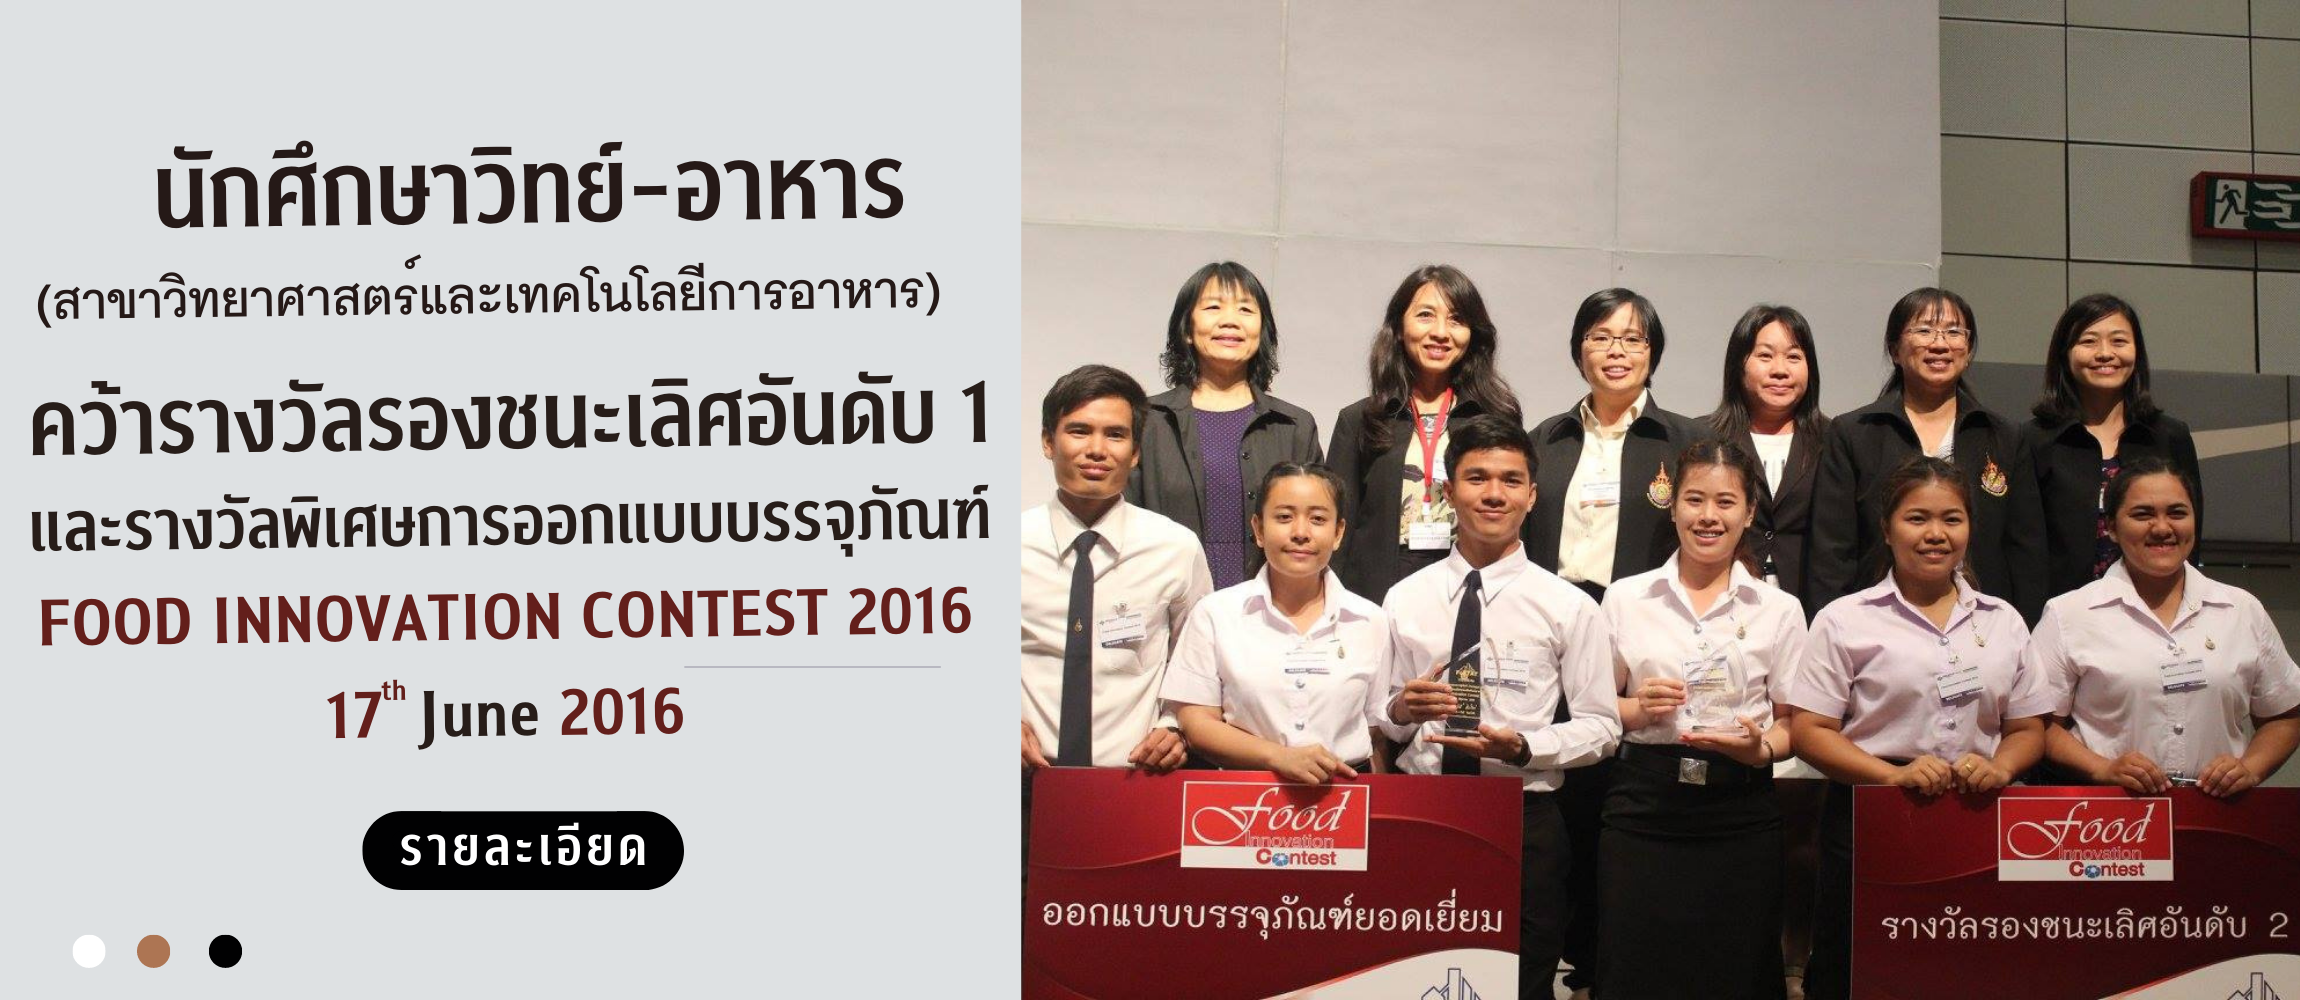 Food Innovation contest 2016